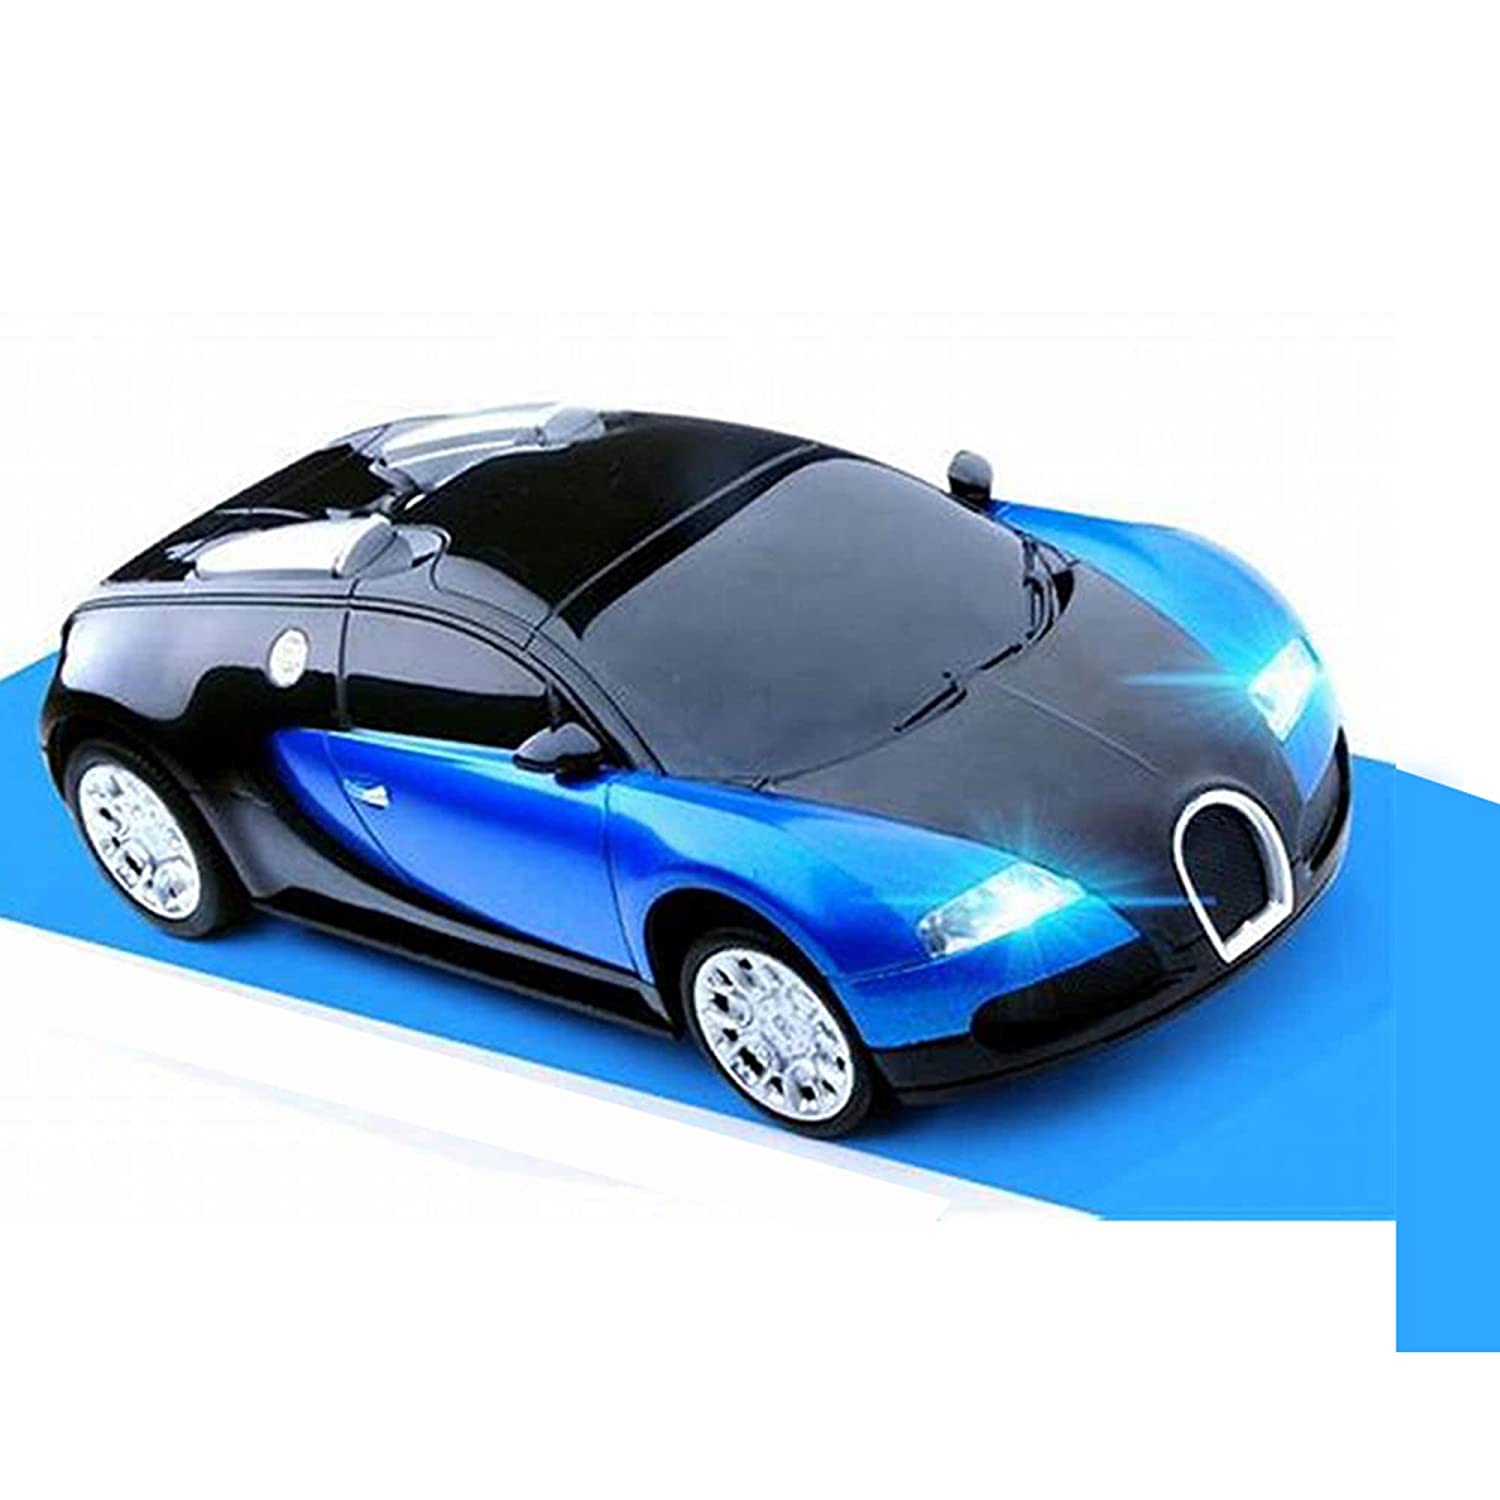 Playzu R/C 1:24 Scale Sports Vehicle, Blue & Black - Remote Control Car for Kids Ages 6+